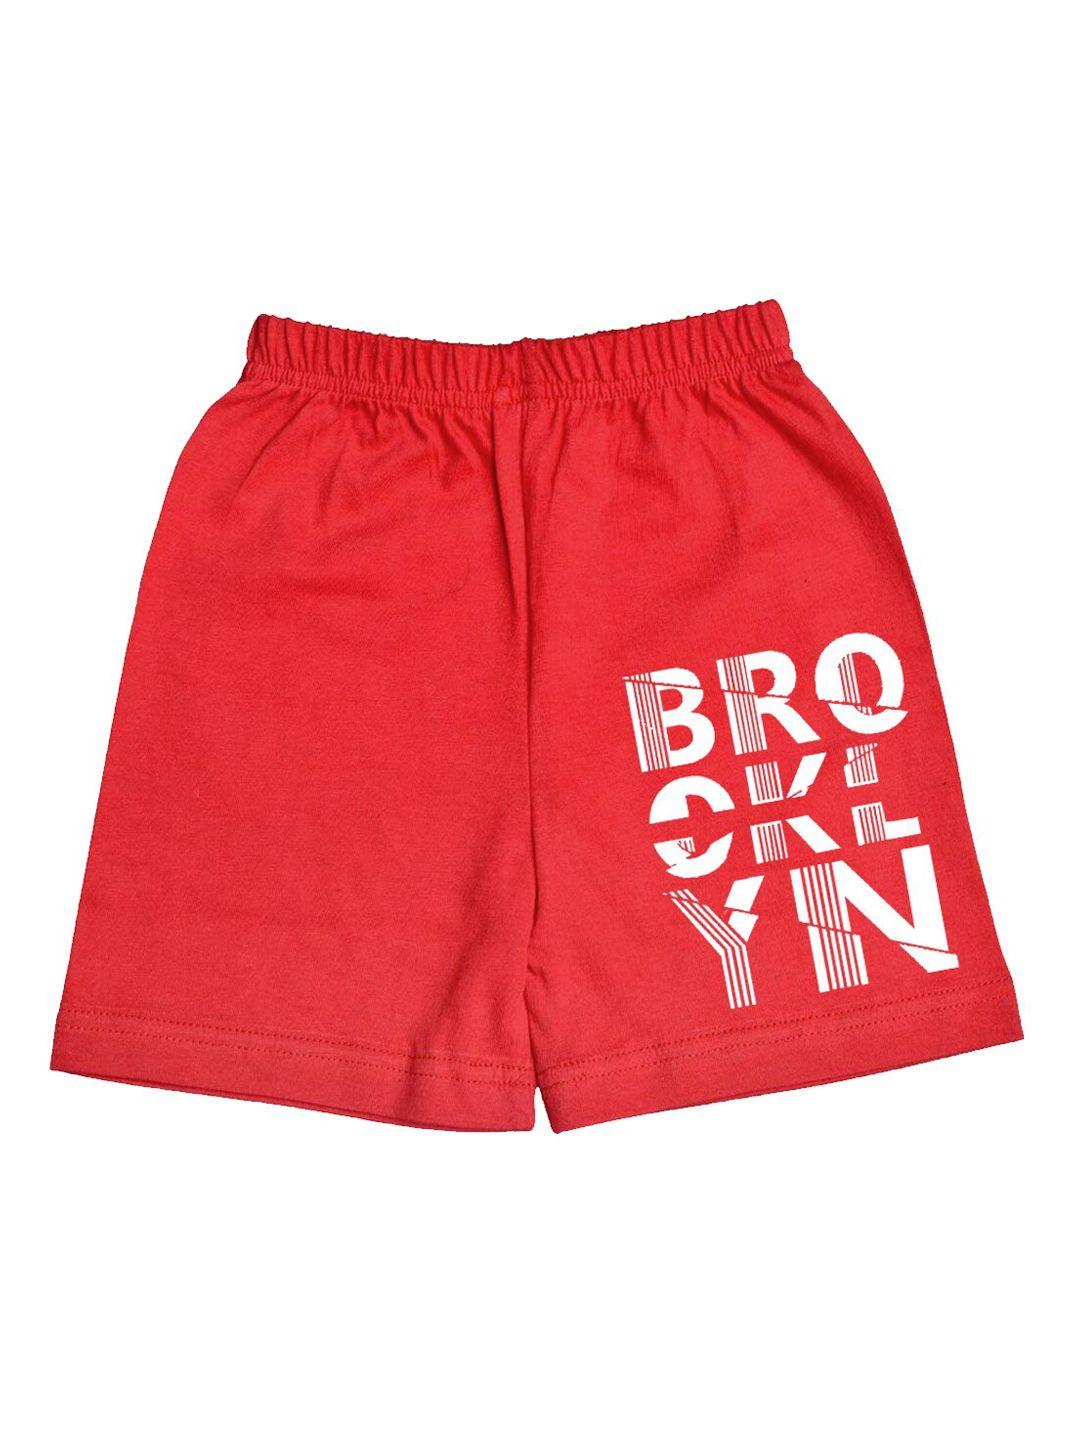 a.t.u.n. boys typography printed cotton shorts